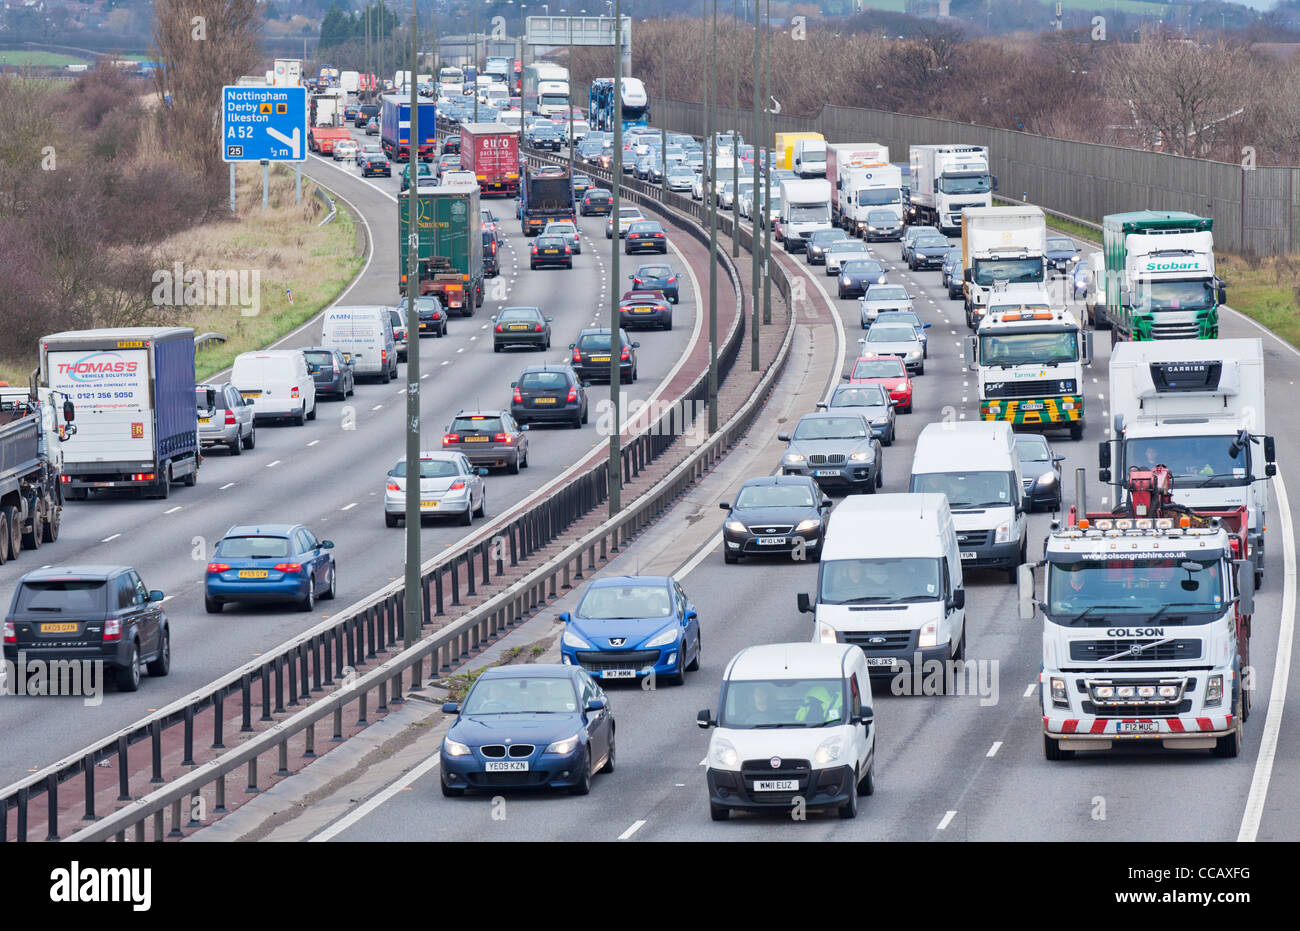 Traffic on motorway uk Motorway Traffic Jam on the M1 motorway near junction 25 Nottingham England gb uk europe Stock Photo